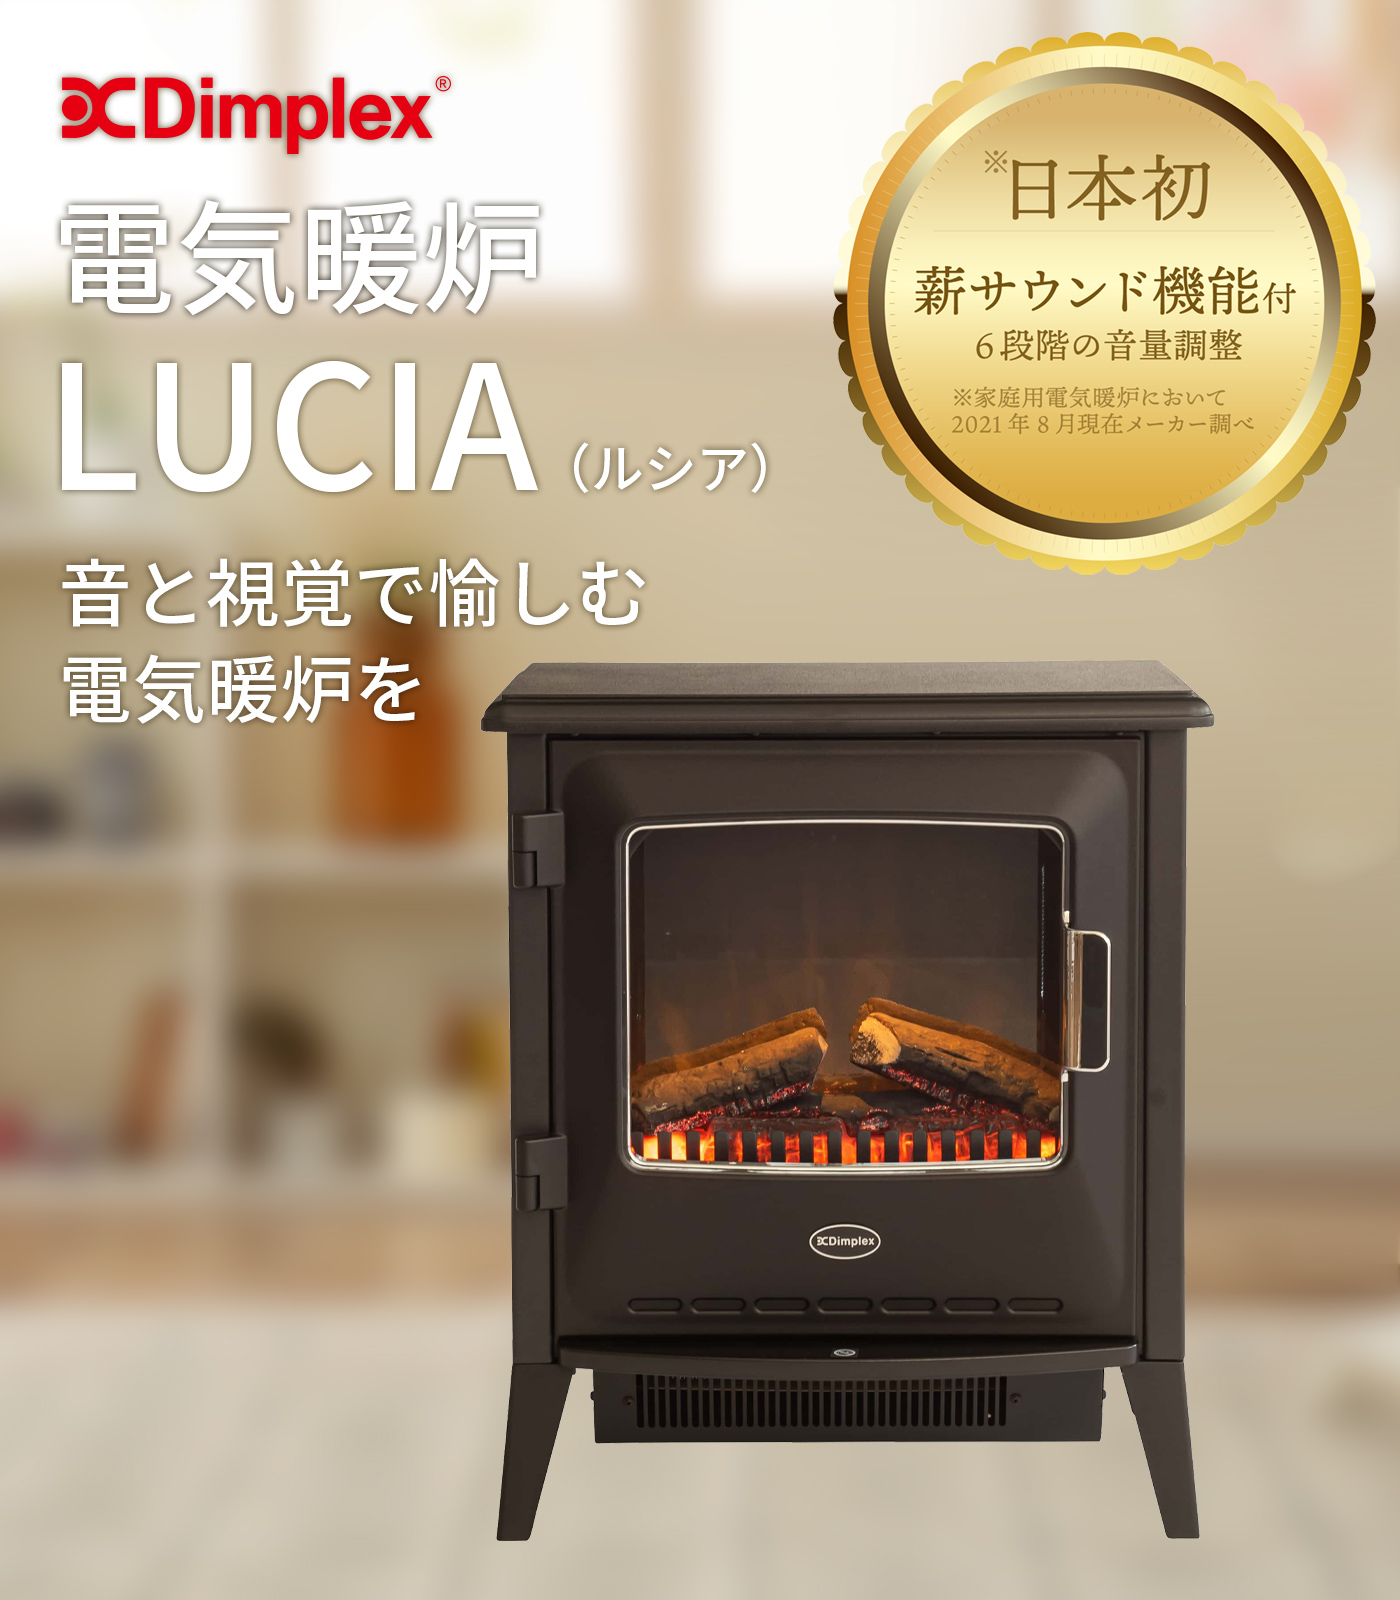 Dimplex 電気暖炉 Lucia 音と視覚で愉しむ電気暖炉 : 10266-n : JCC 